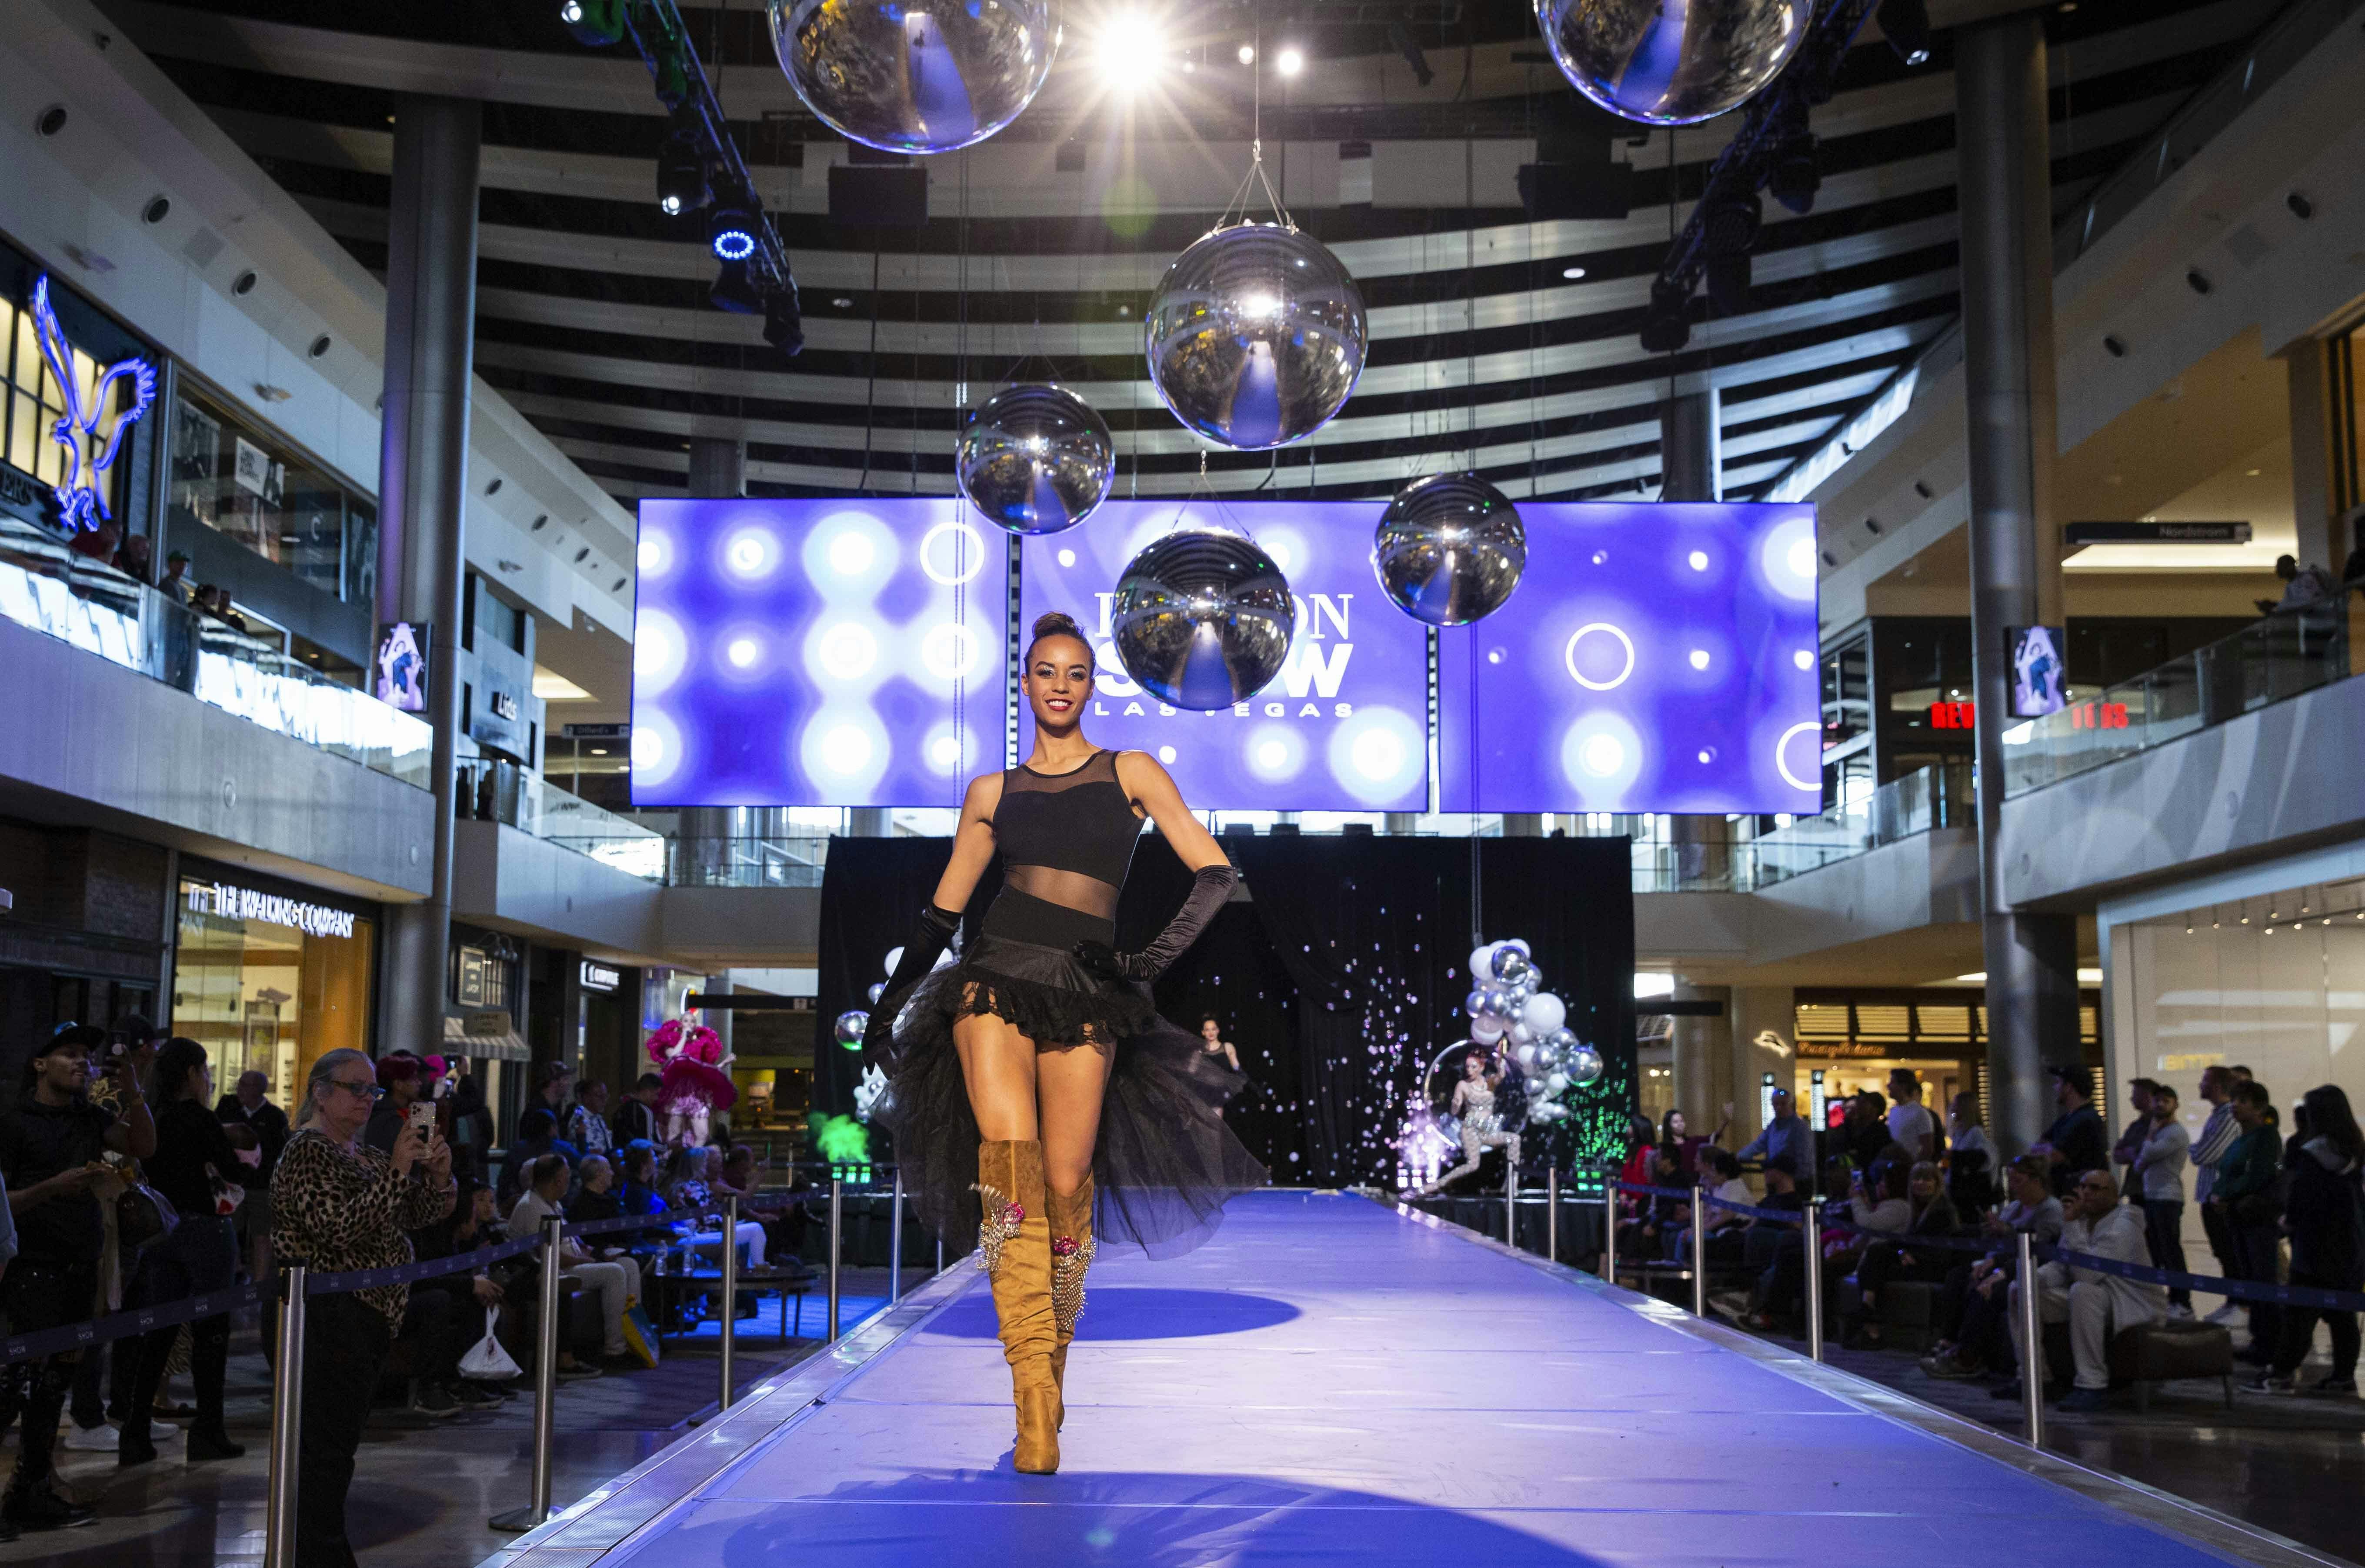 Ichiban at Fashion Show Mall - Las Vegas Weekly